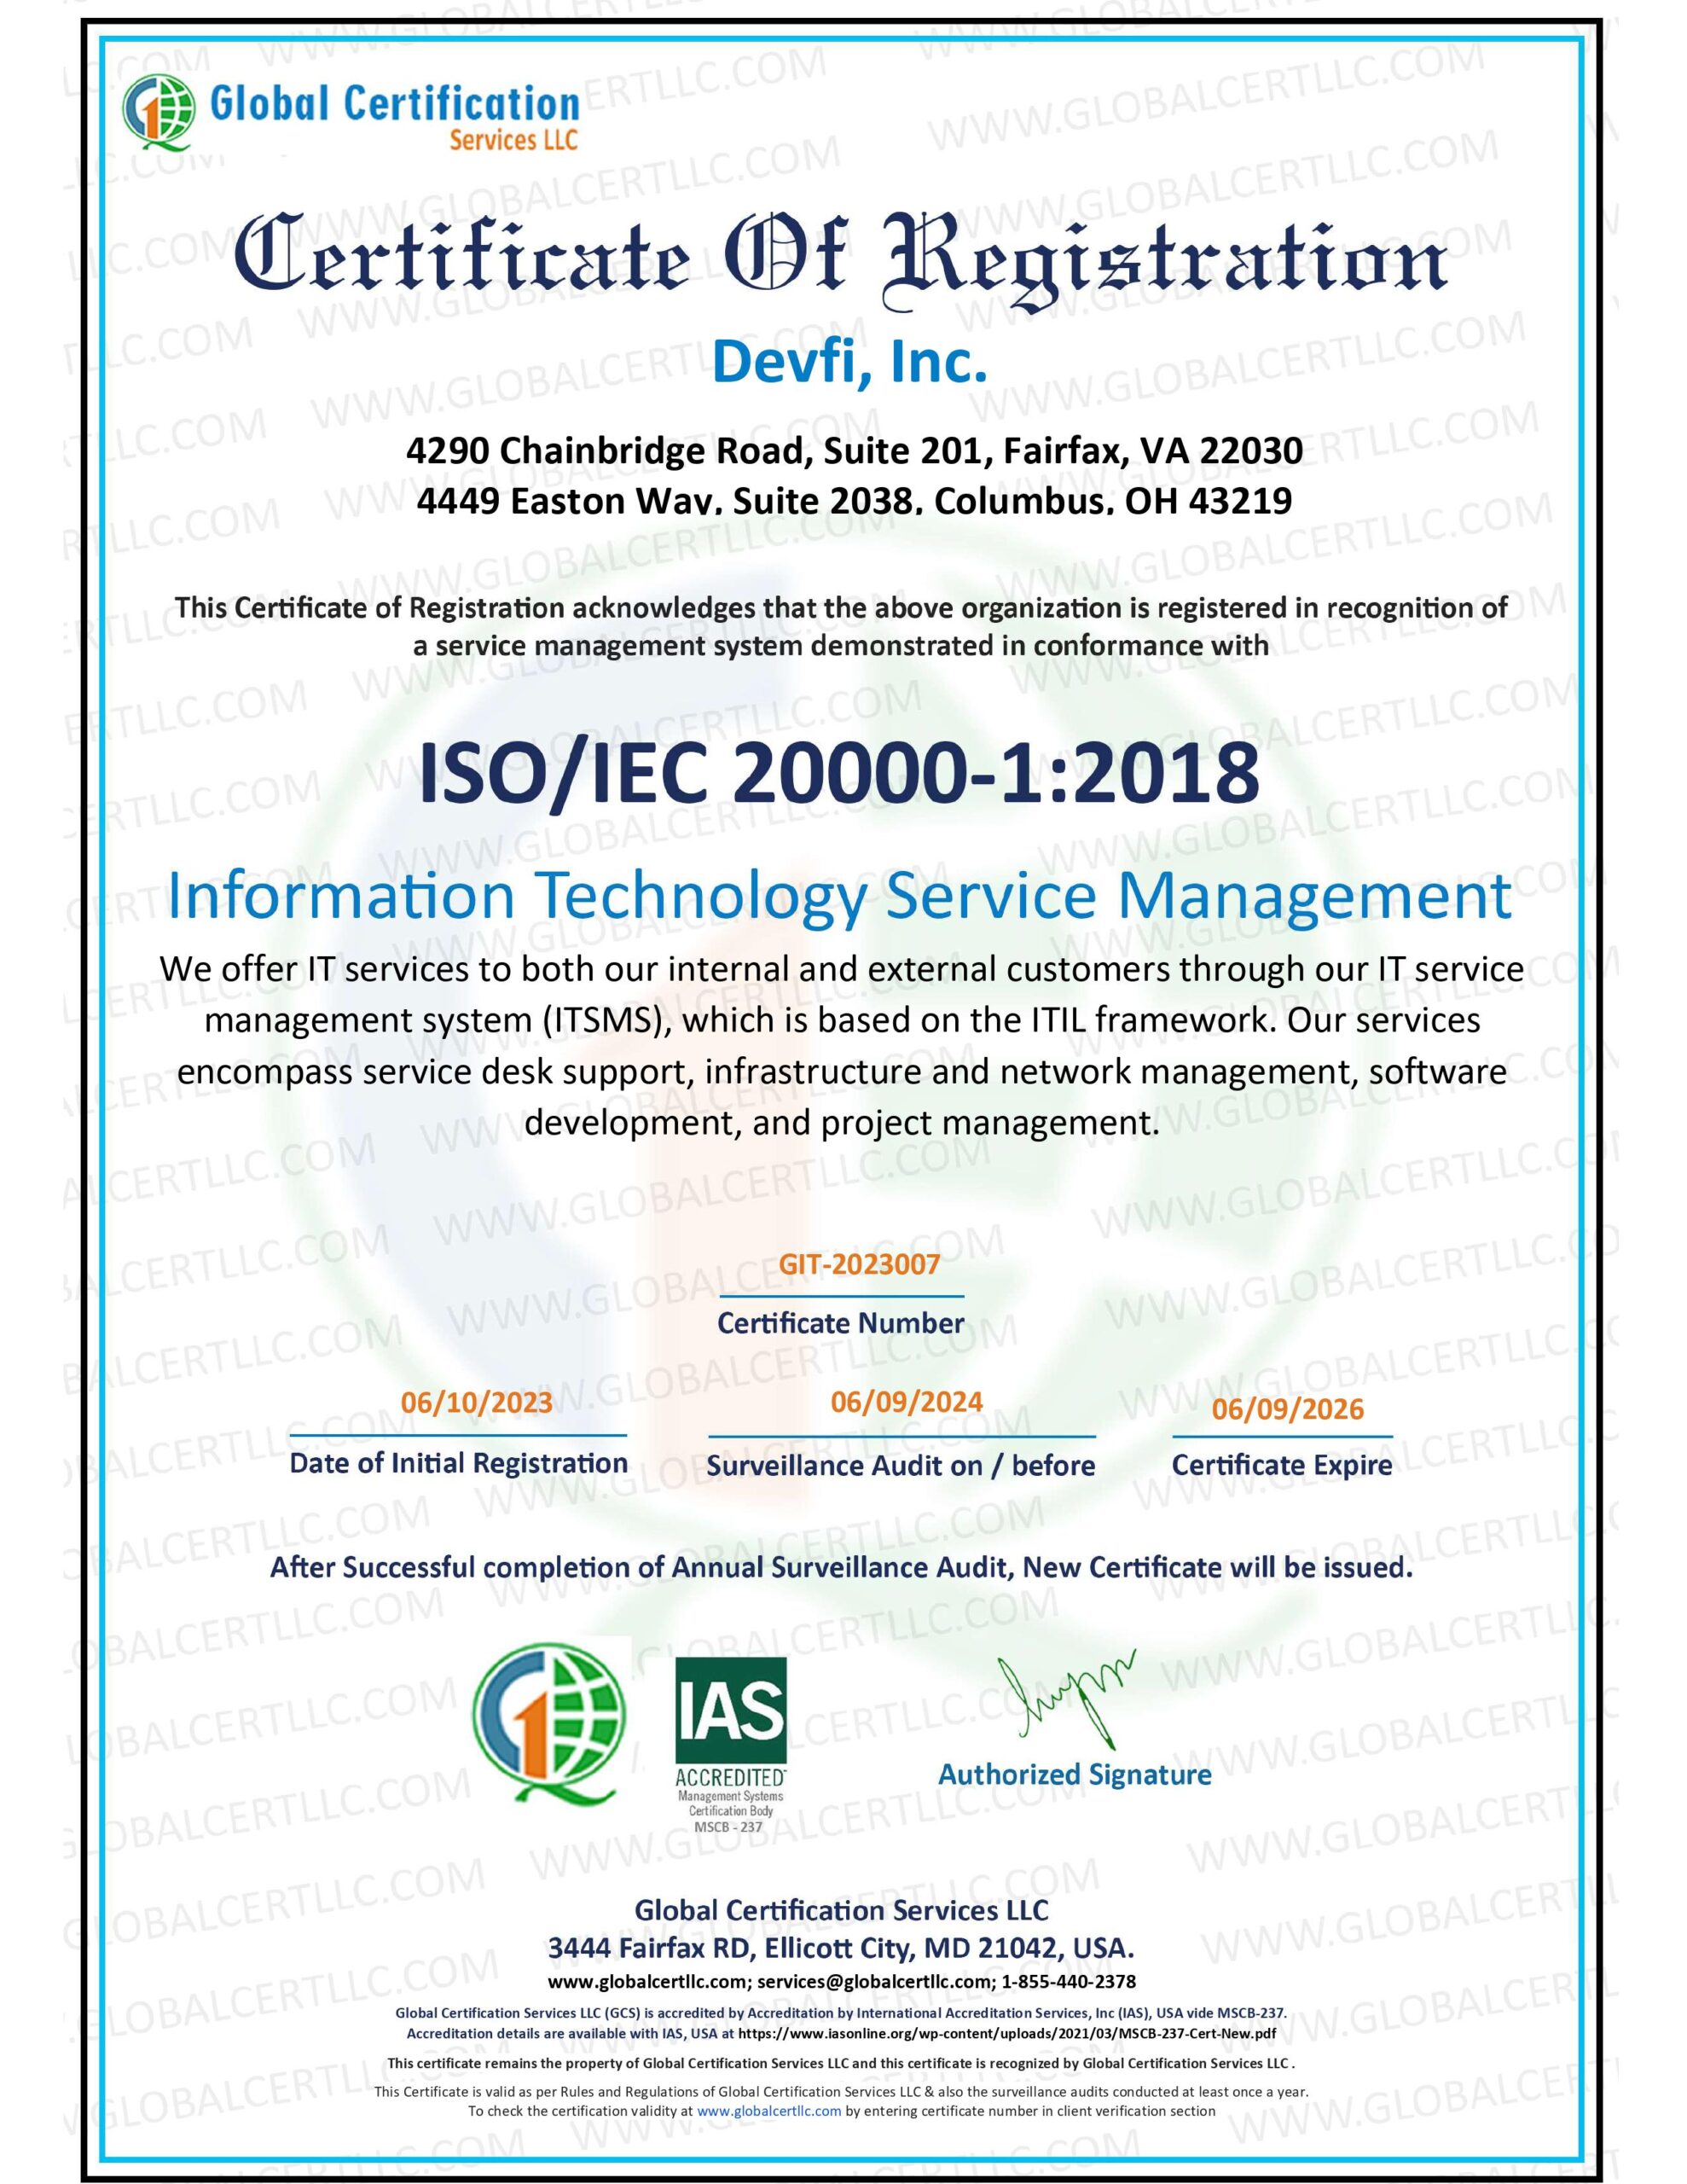 GIT-2023007 - ISO IEC 20000 1 2018 Standards Certificate (1)